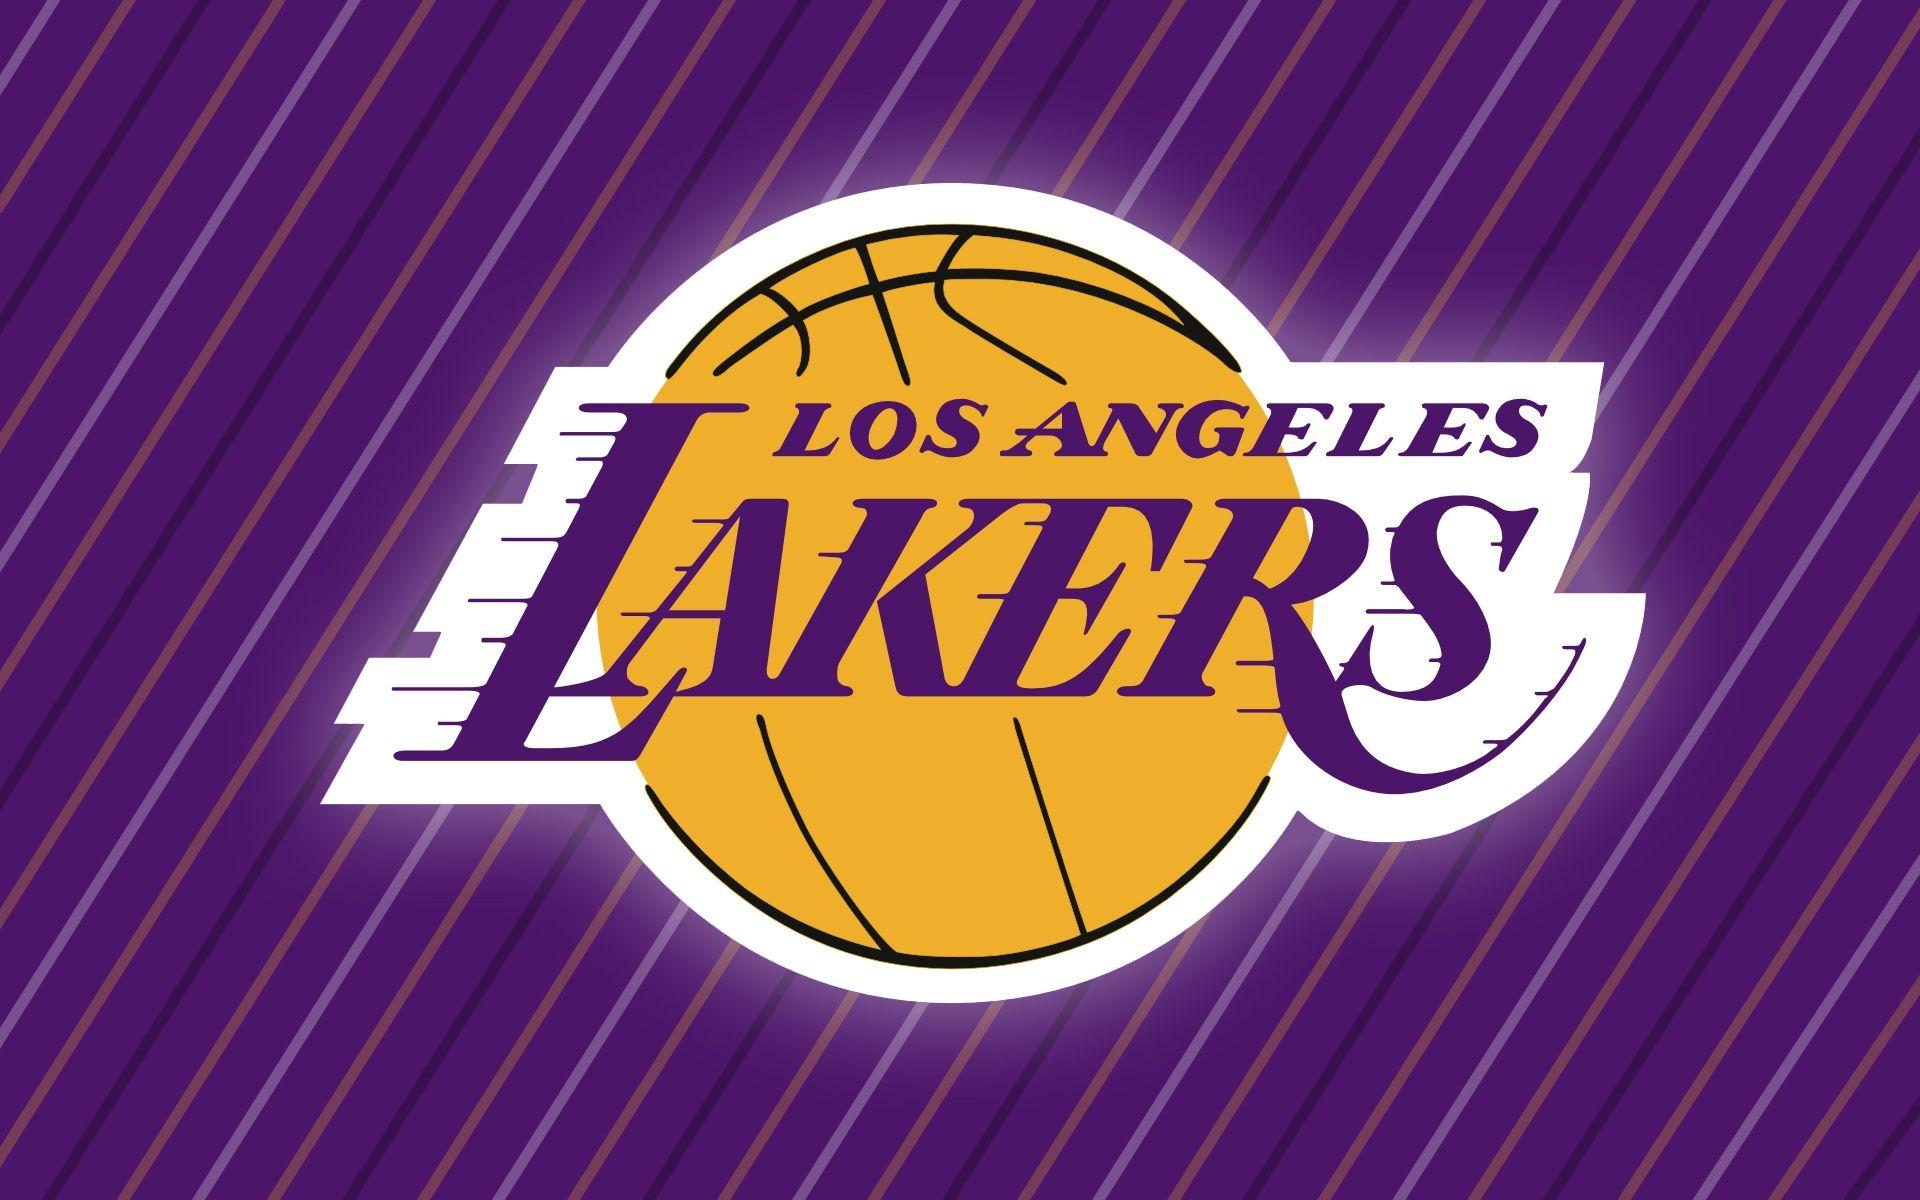 Lakers Logo Wallpaper. Wallpaper, Background, Image, Art Photo